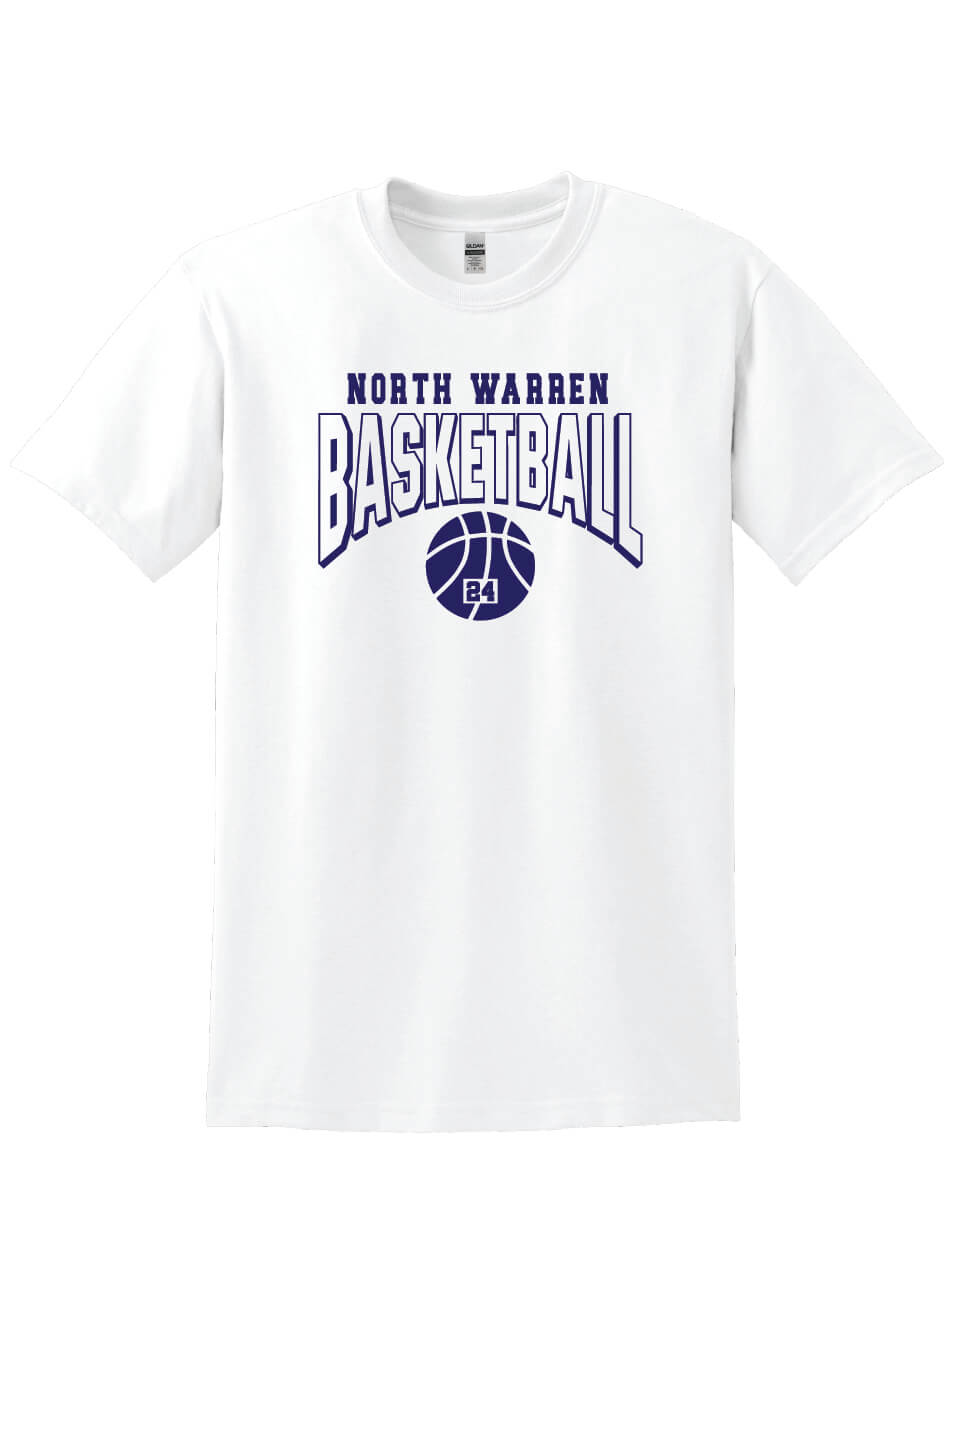 Basketball Short Sleeve T-Shirt (Youth) white